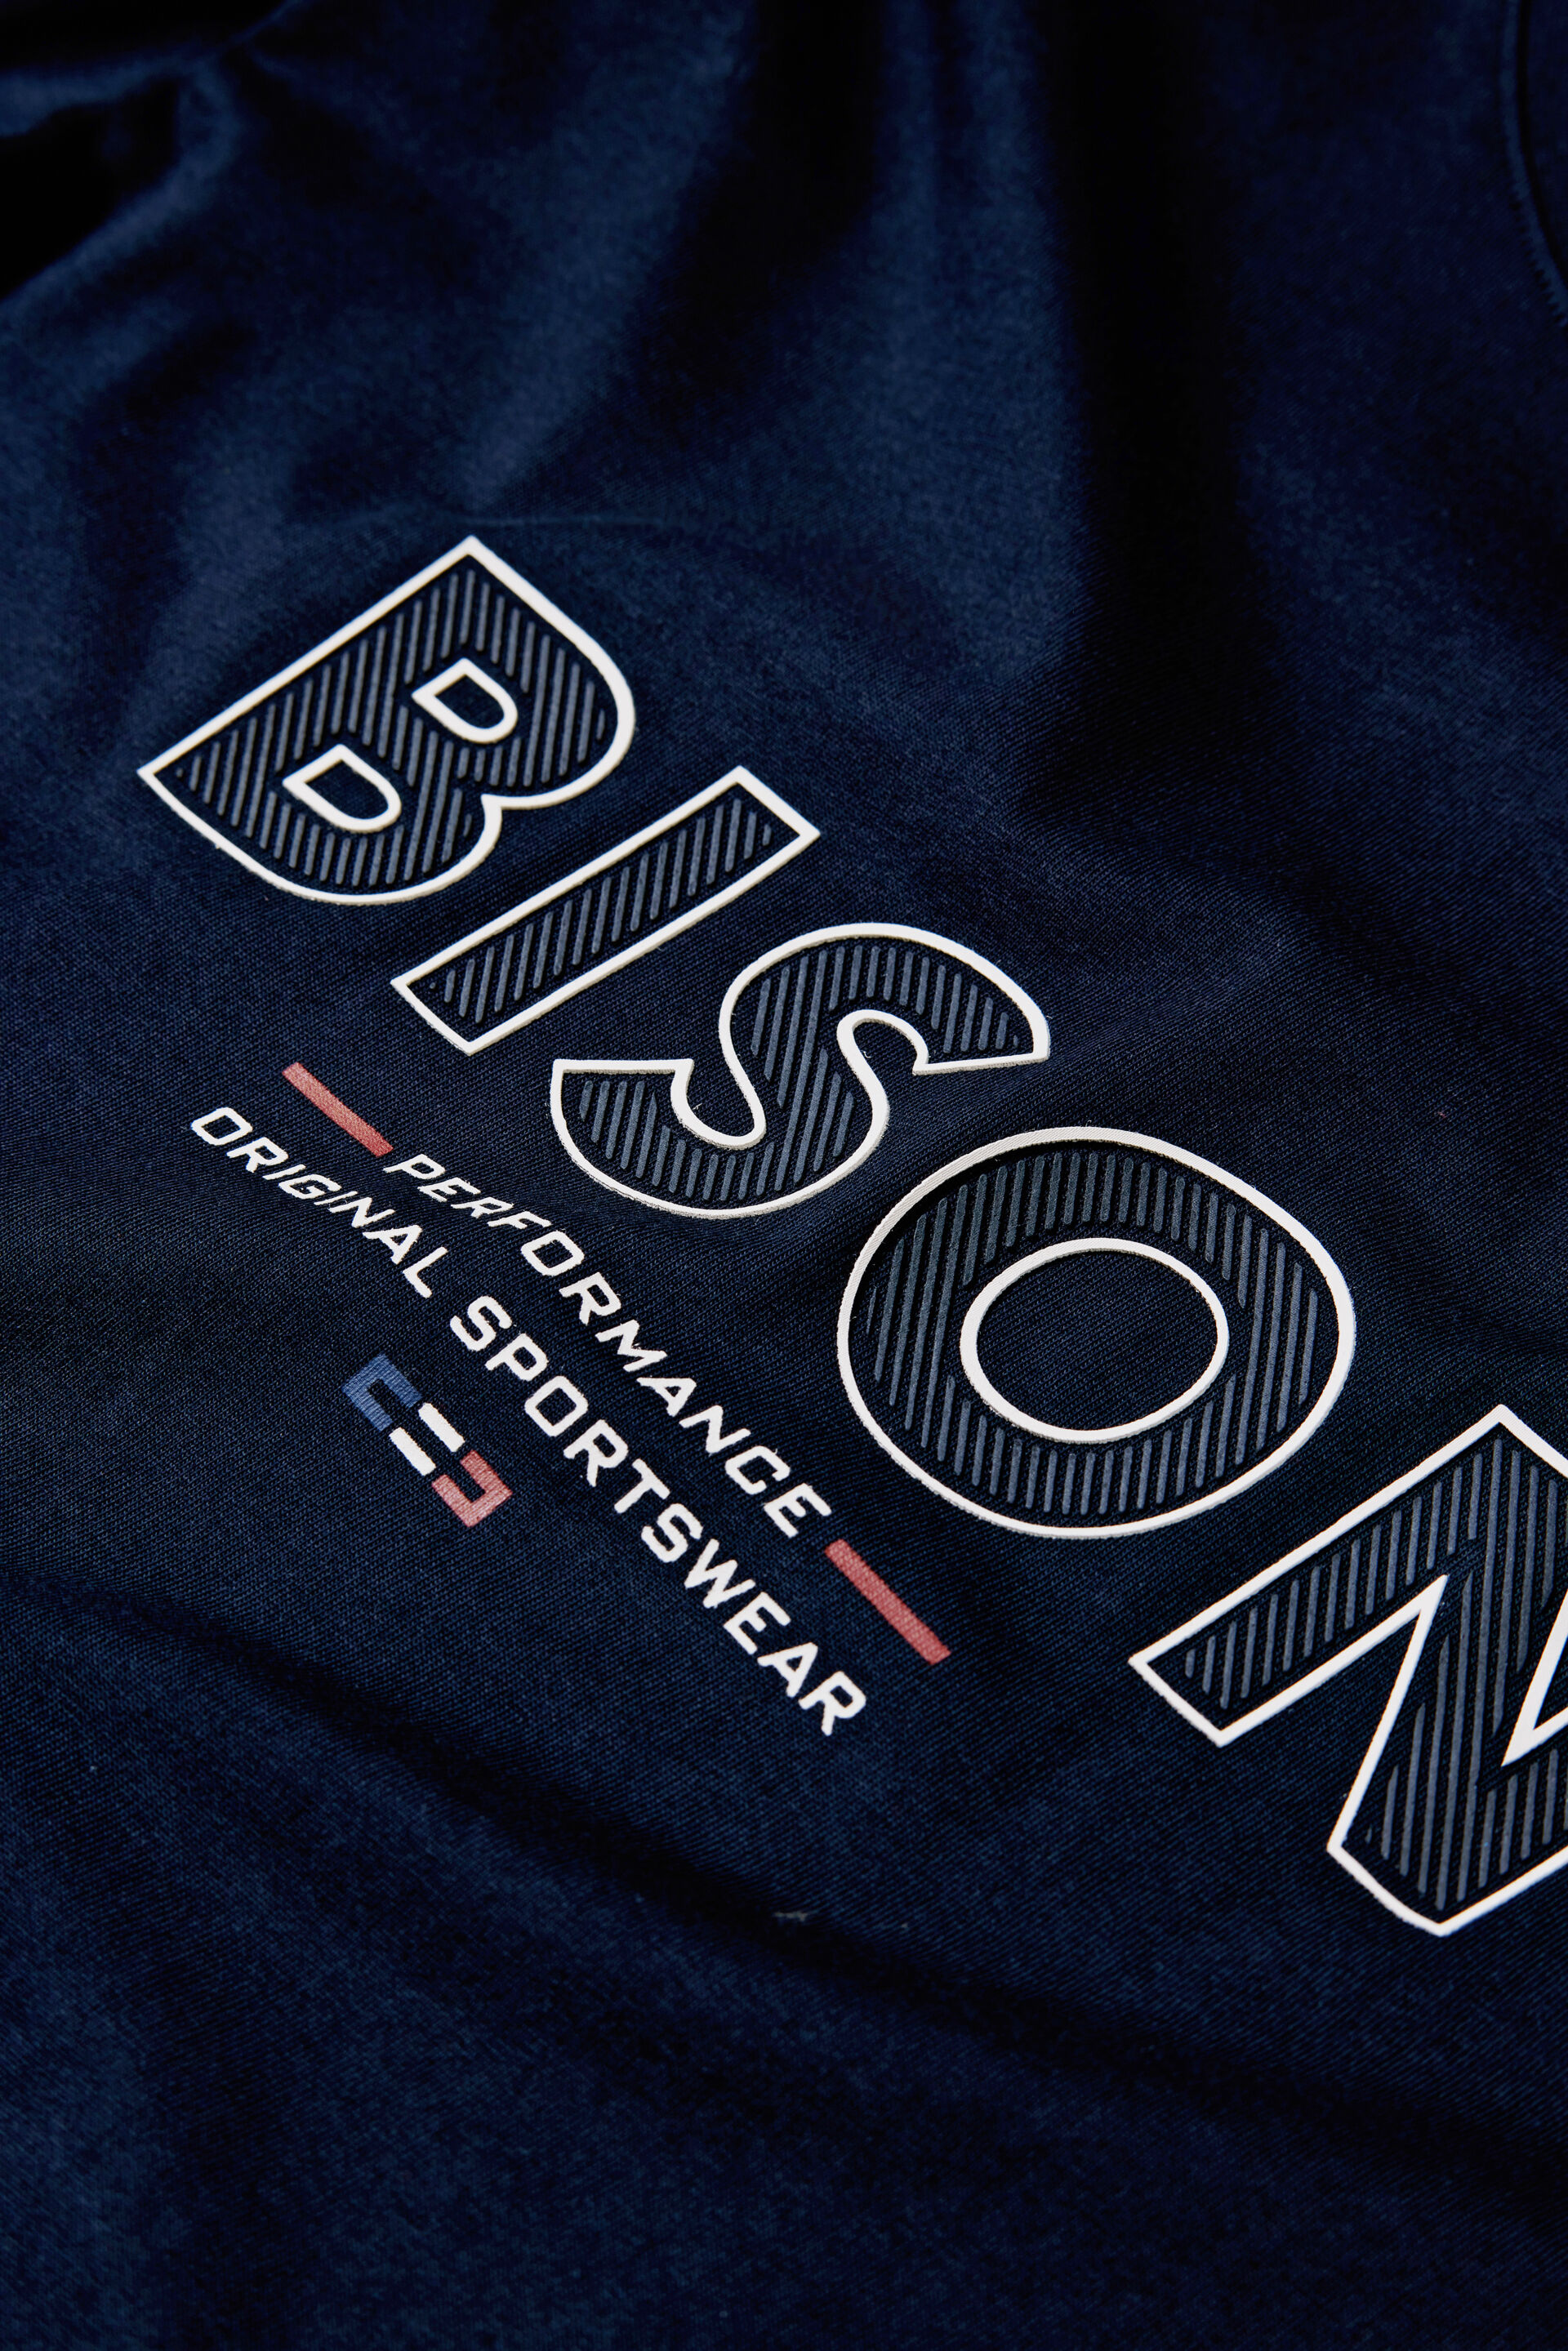 Bison  T-shirt 80-400107